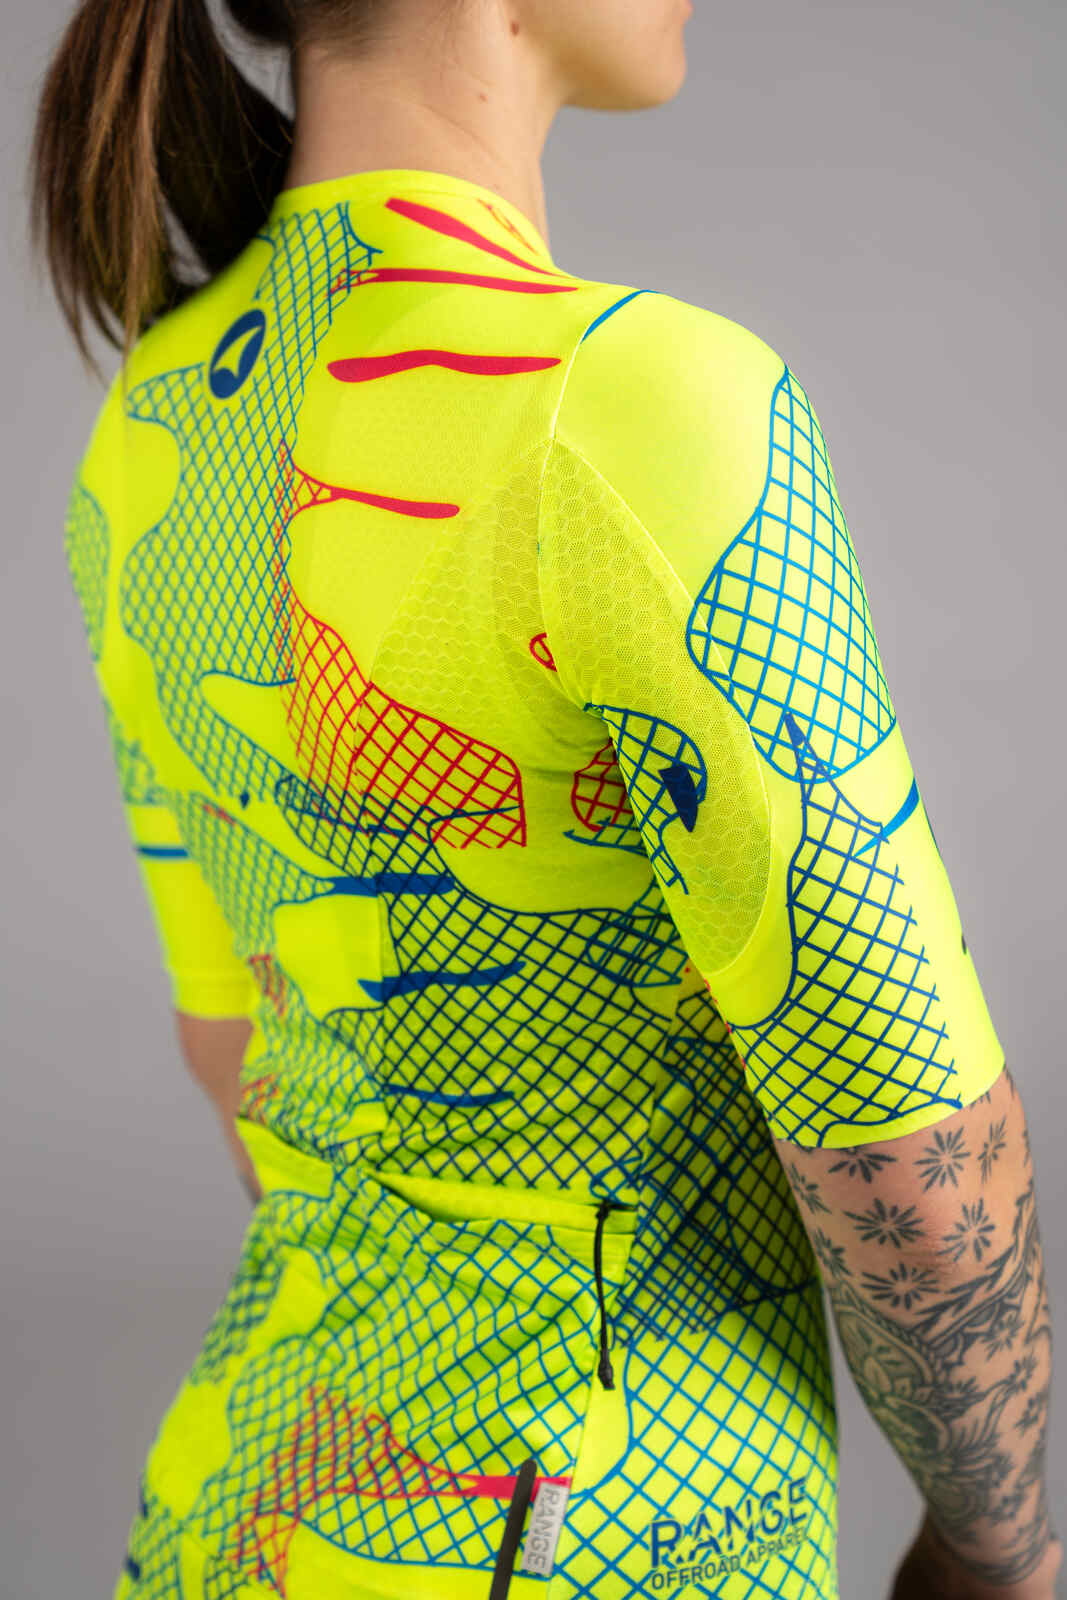 Women's High-Viz Yellow Gravel Cycling Jersey - Underarm Mesh Fabric